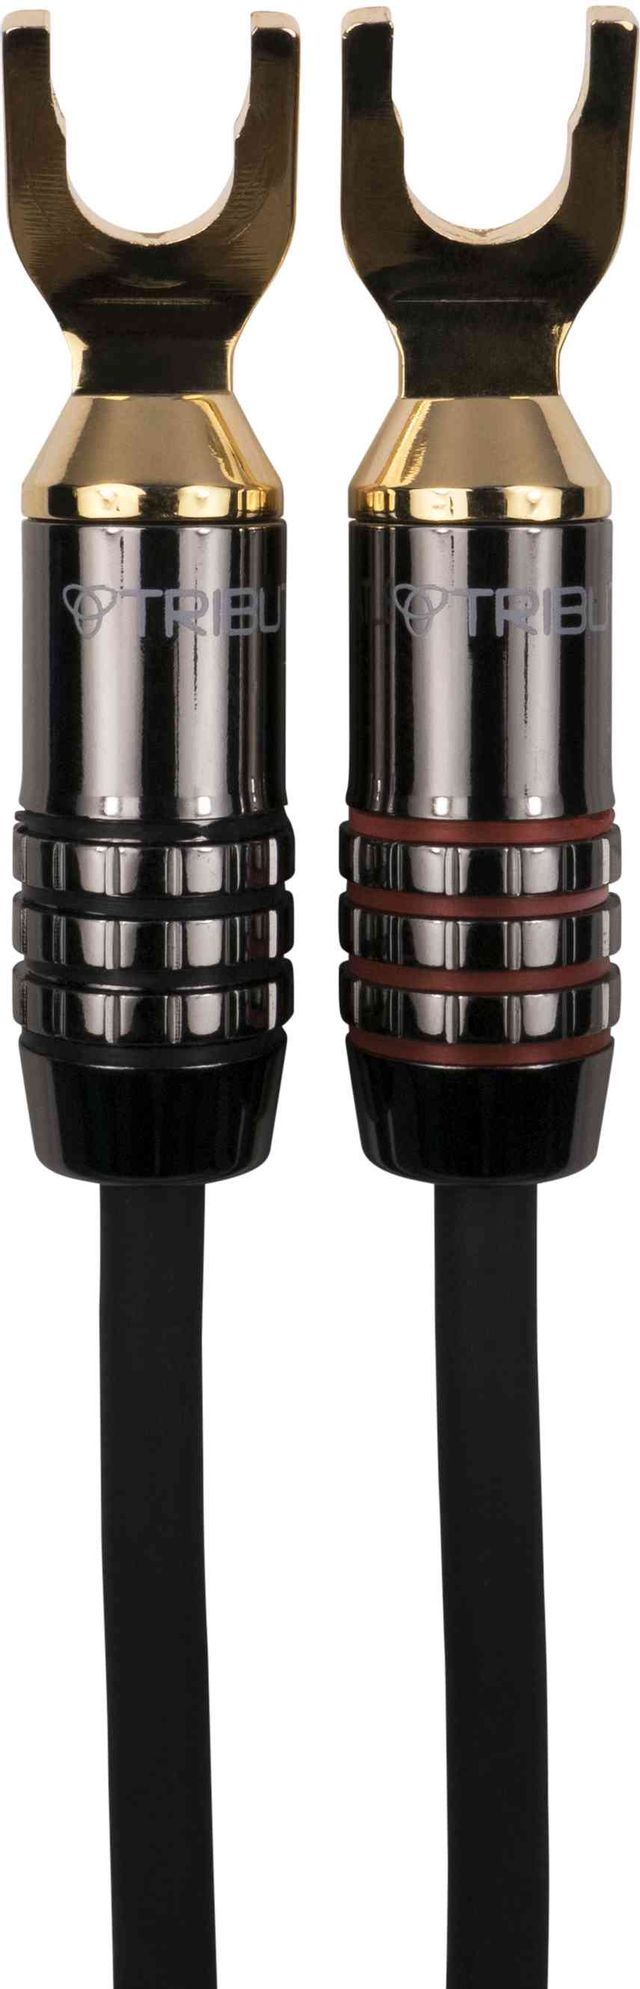 Tributaries® Series 8 12 Ft. Spade Lugs Speaker Cable